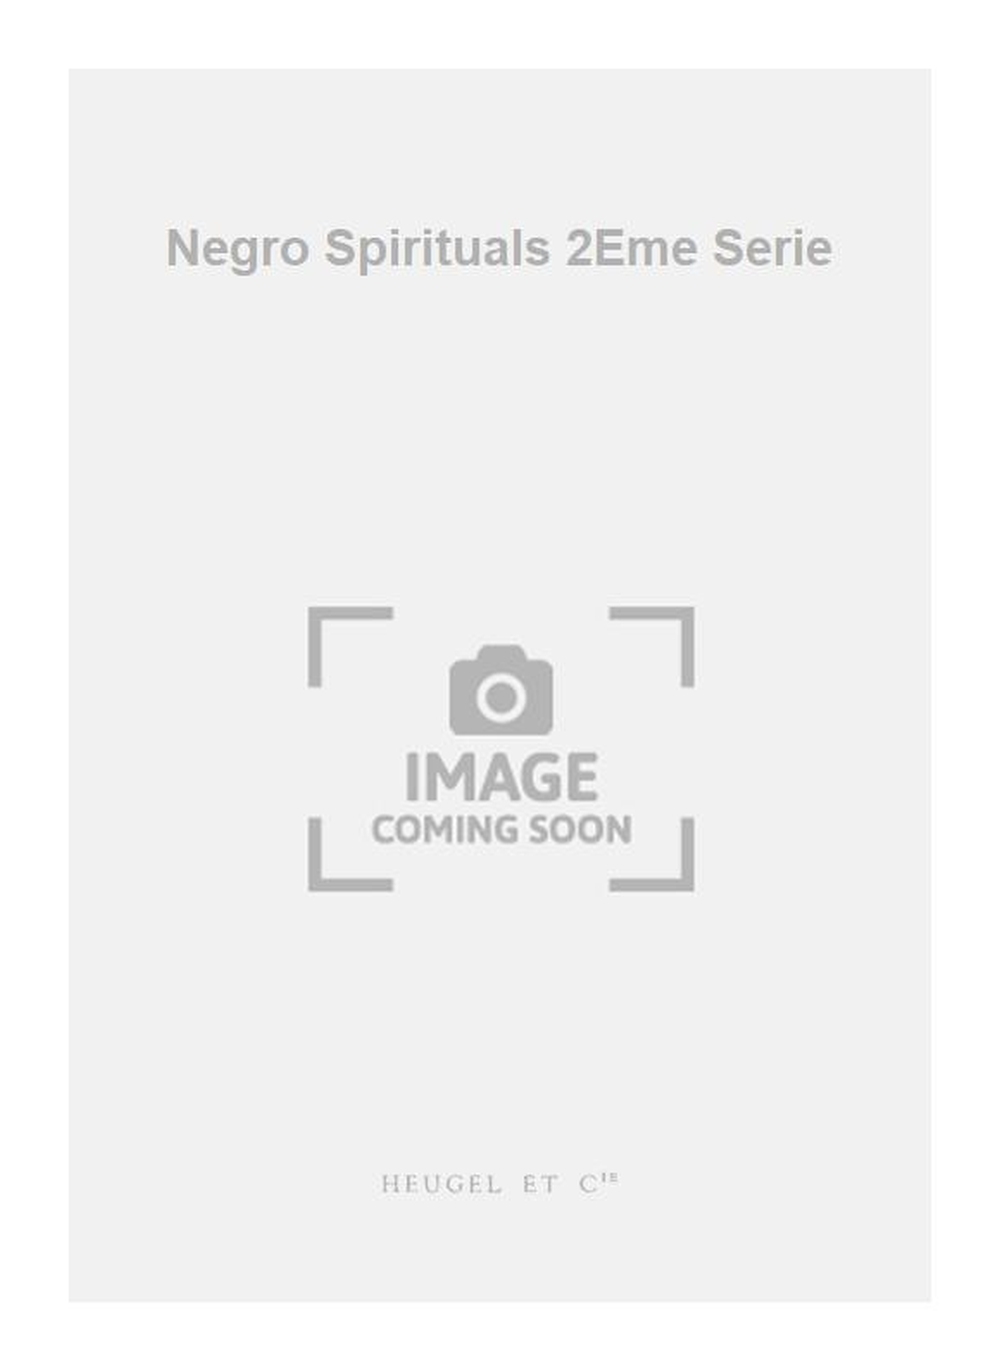 Georges Aubanel: Negro Spirituals 2Eme Serie